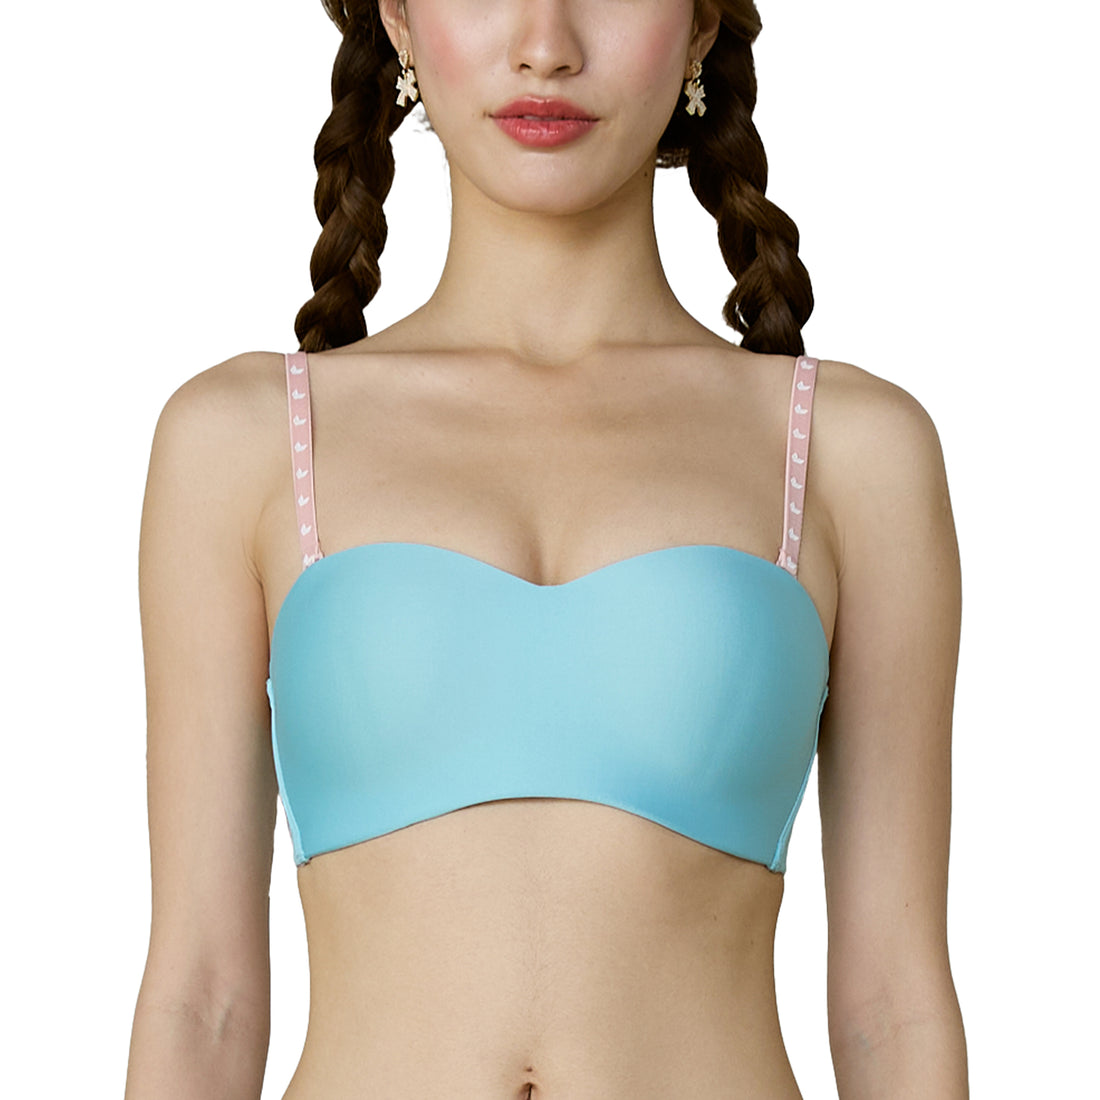 This bra is my favorite! Comfort on 1000 @Woobilly #tiktokshop